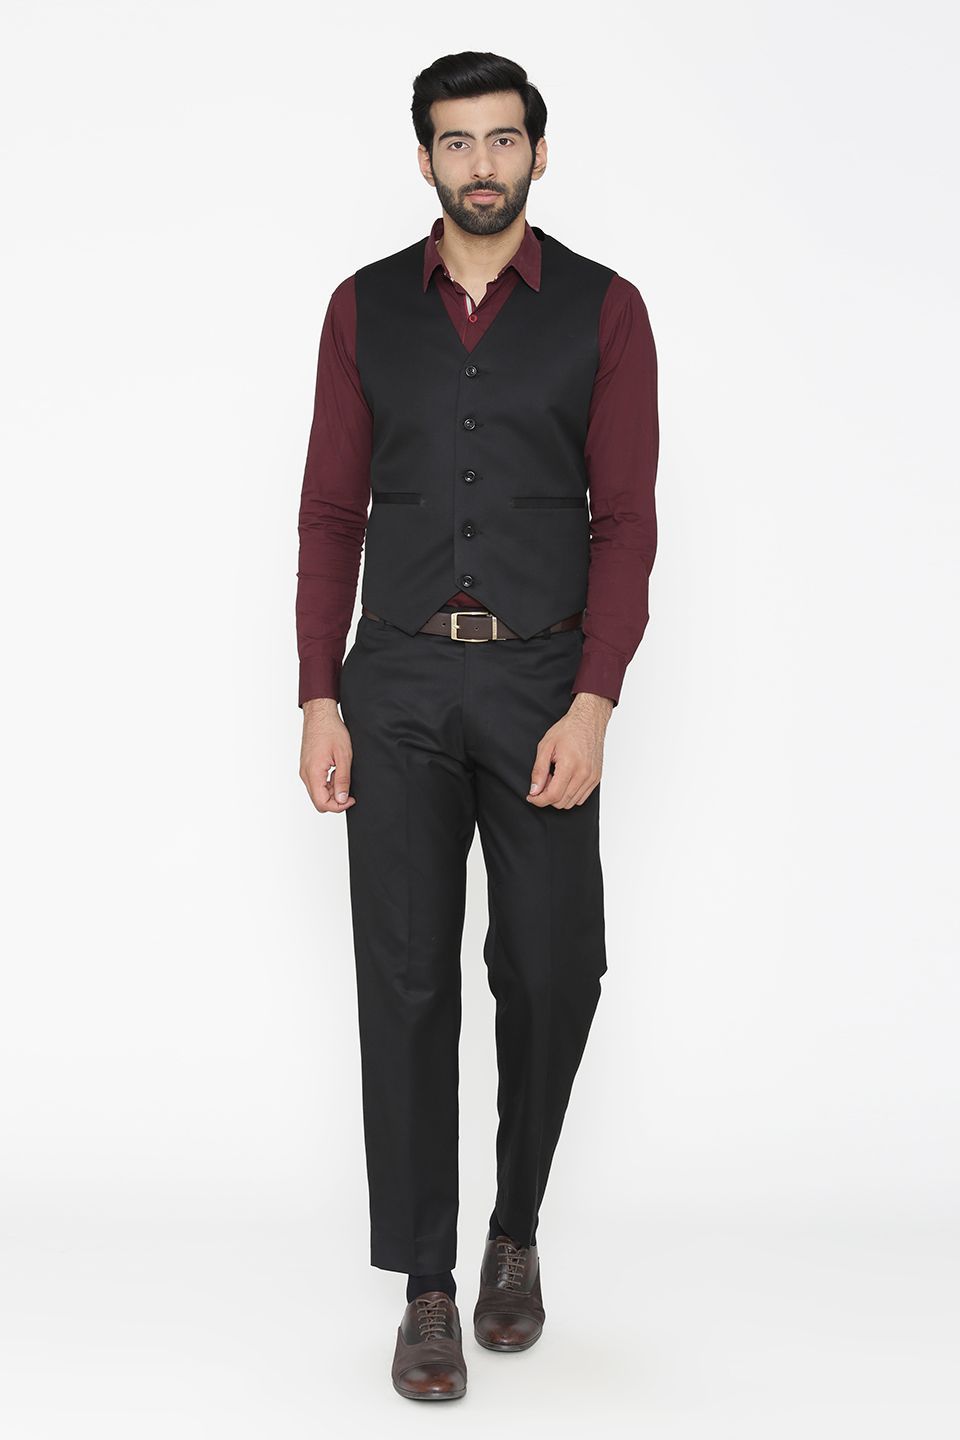 Polyester Cotton Black Vest and Pant Set